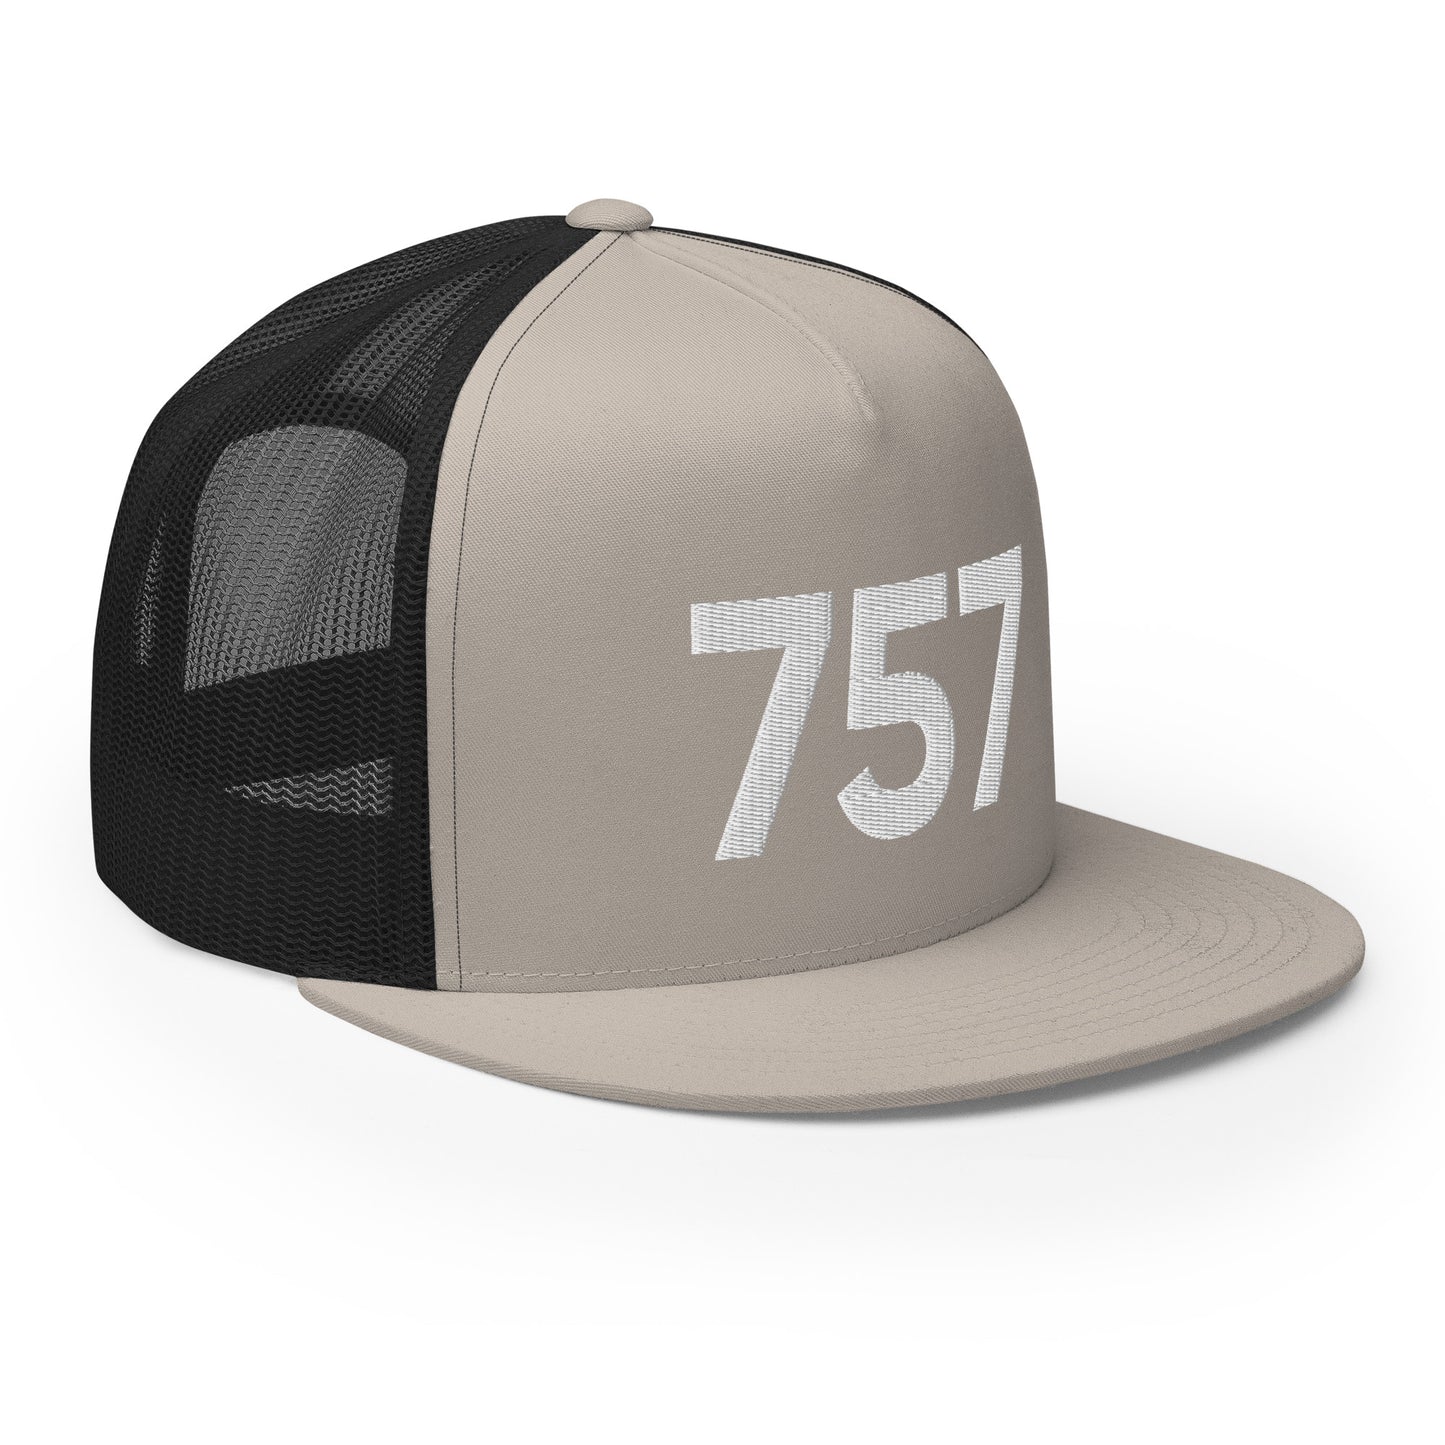 757 VB Trucker Hat